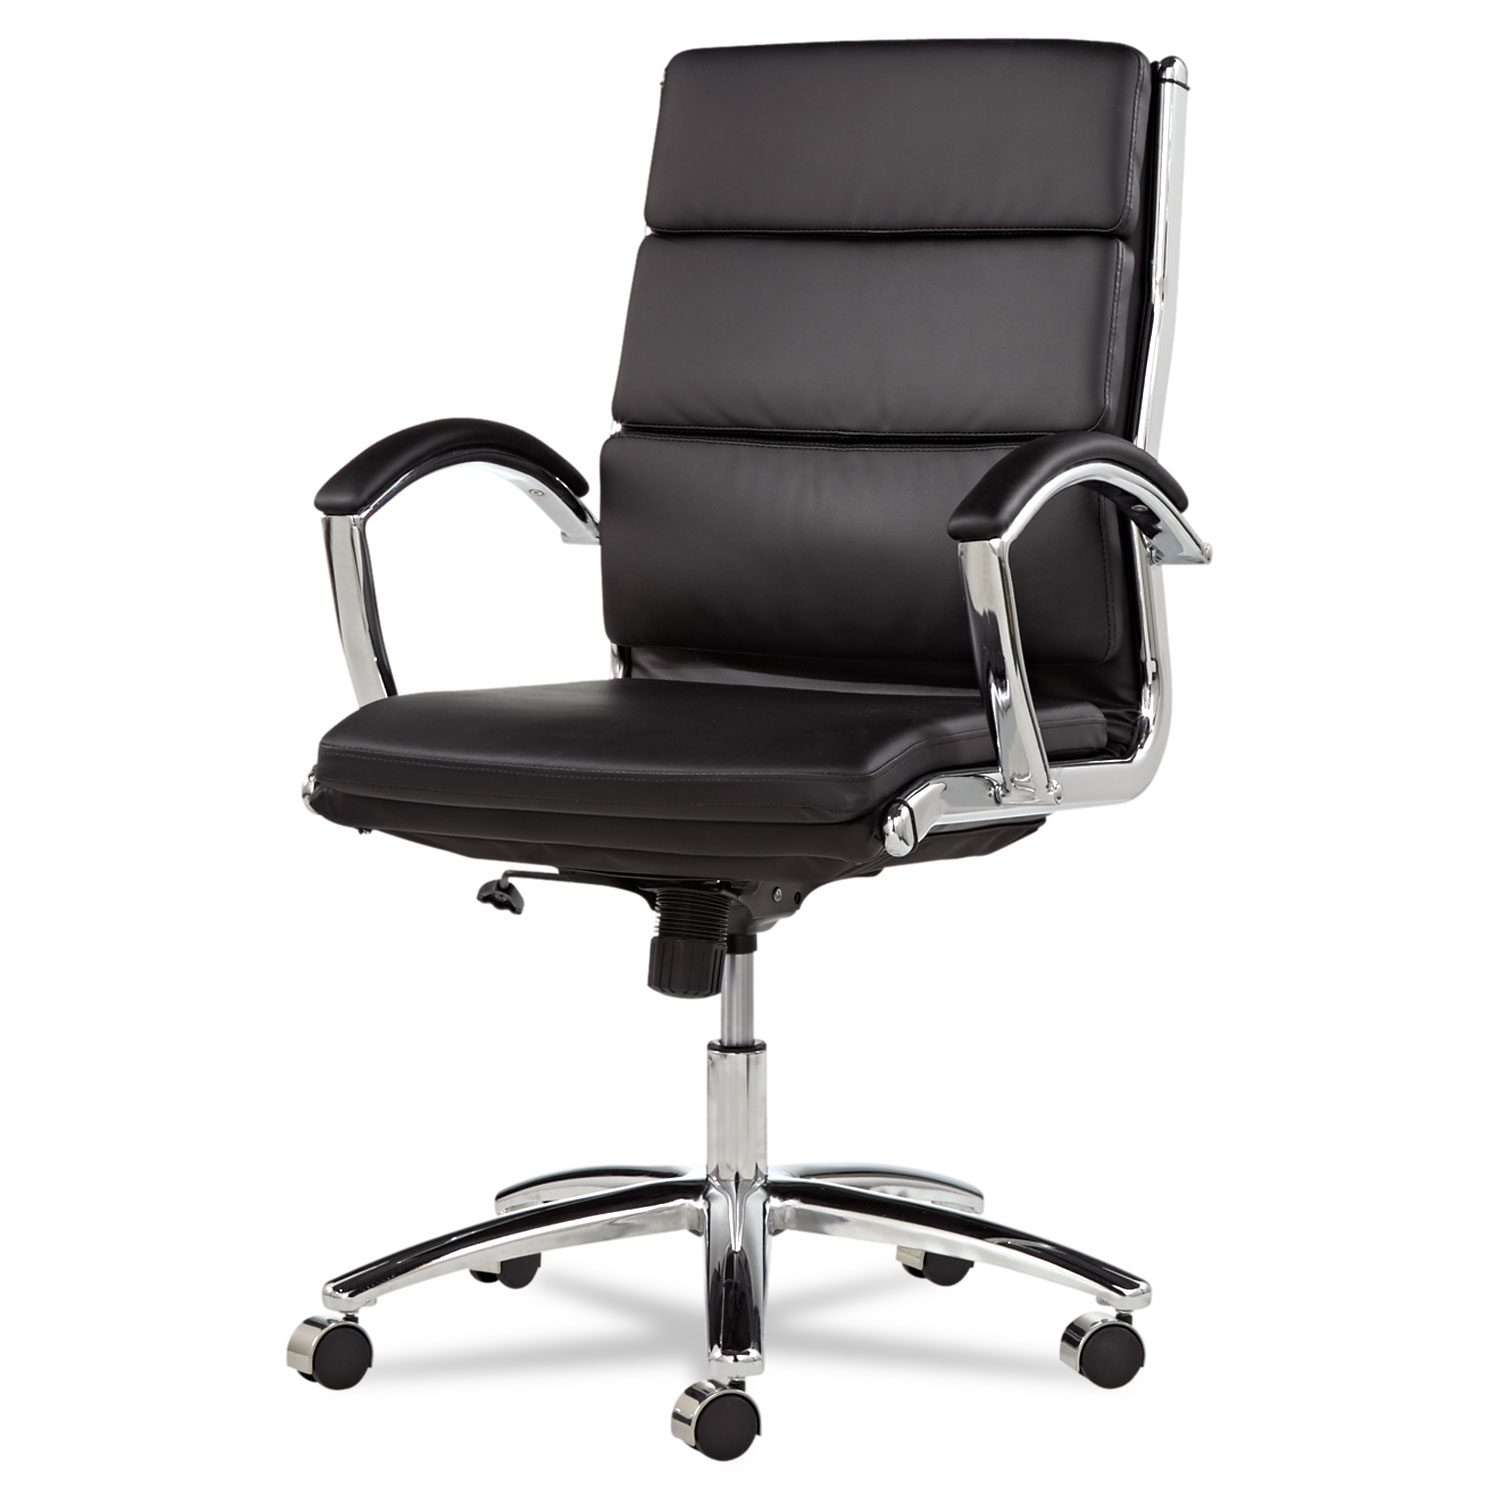 Alera Neratoli Mid-Back Slim Profile Chair, Faux Leather, Supports Up to 275 lb, Black Seat/Back, Chrome Base - image 3 of 8